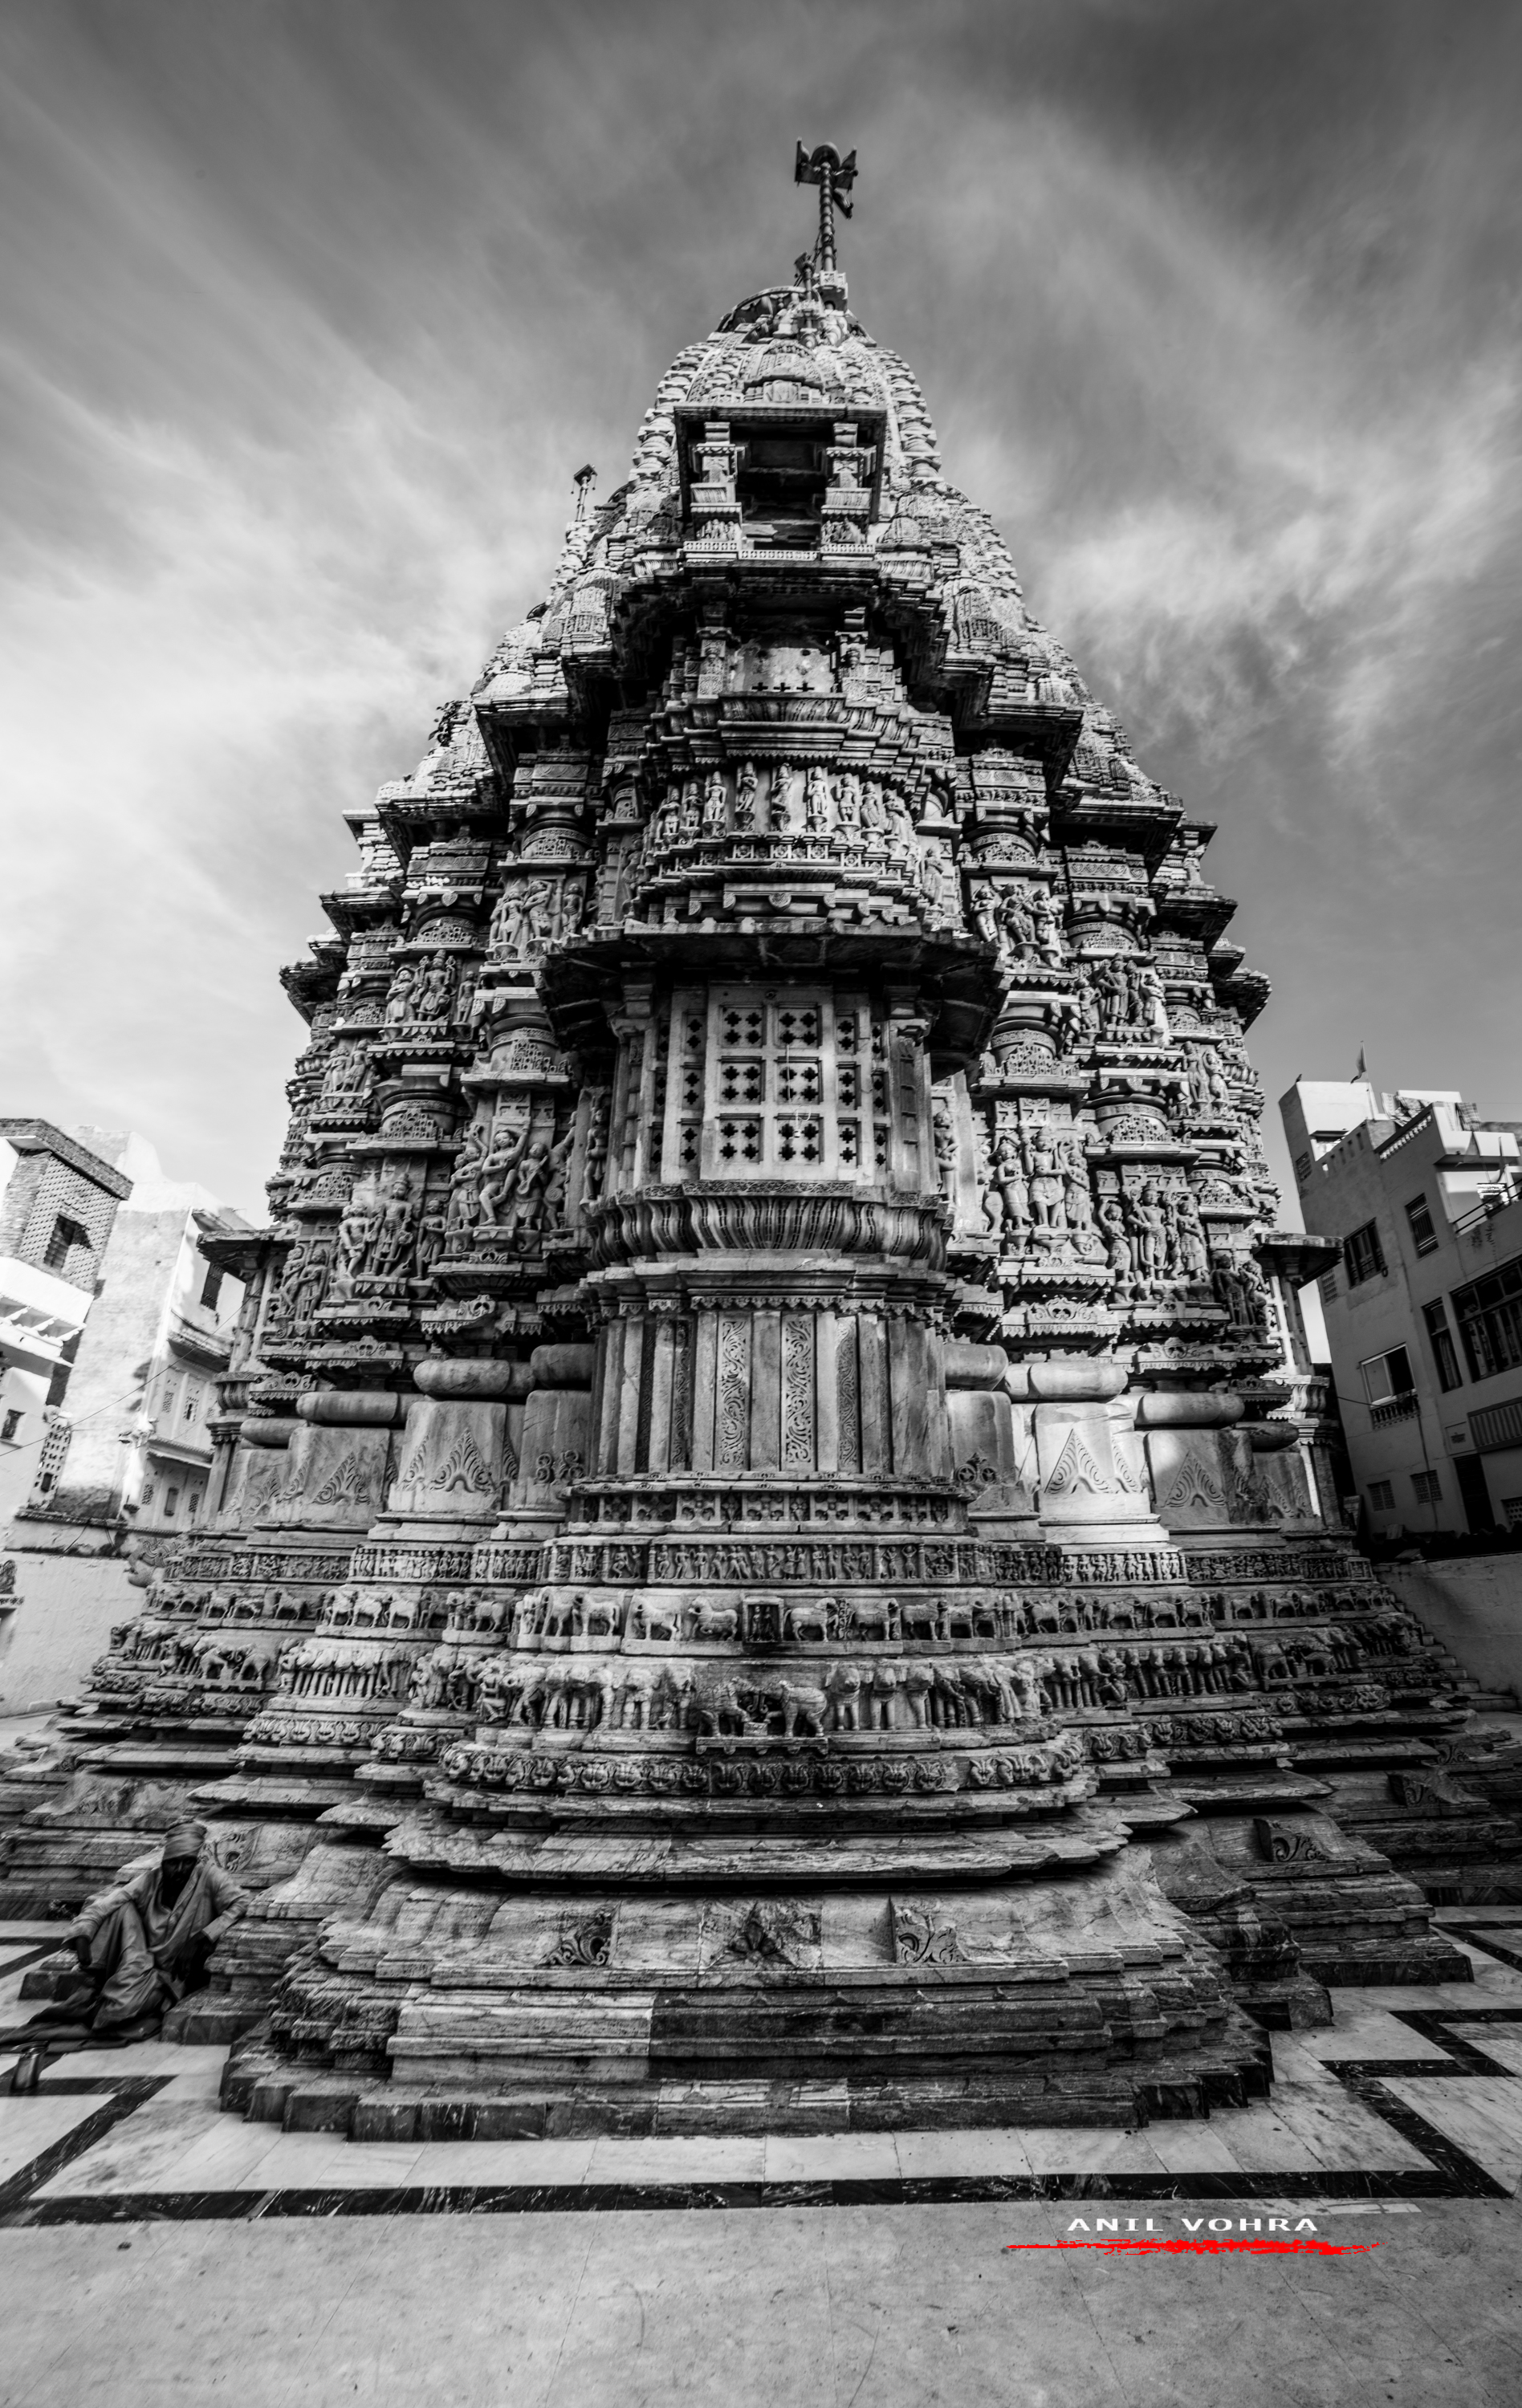 Jagdish temple